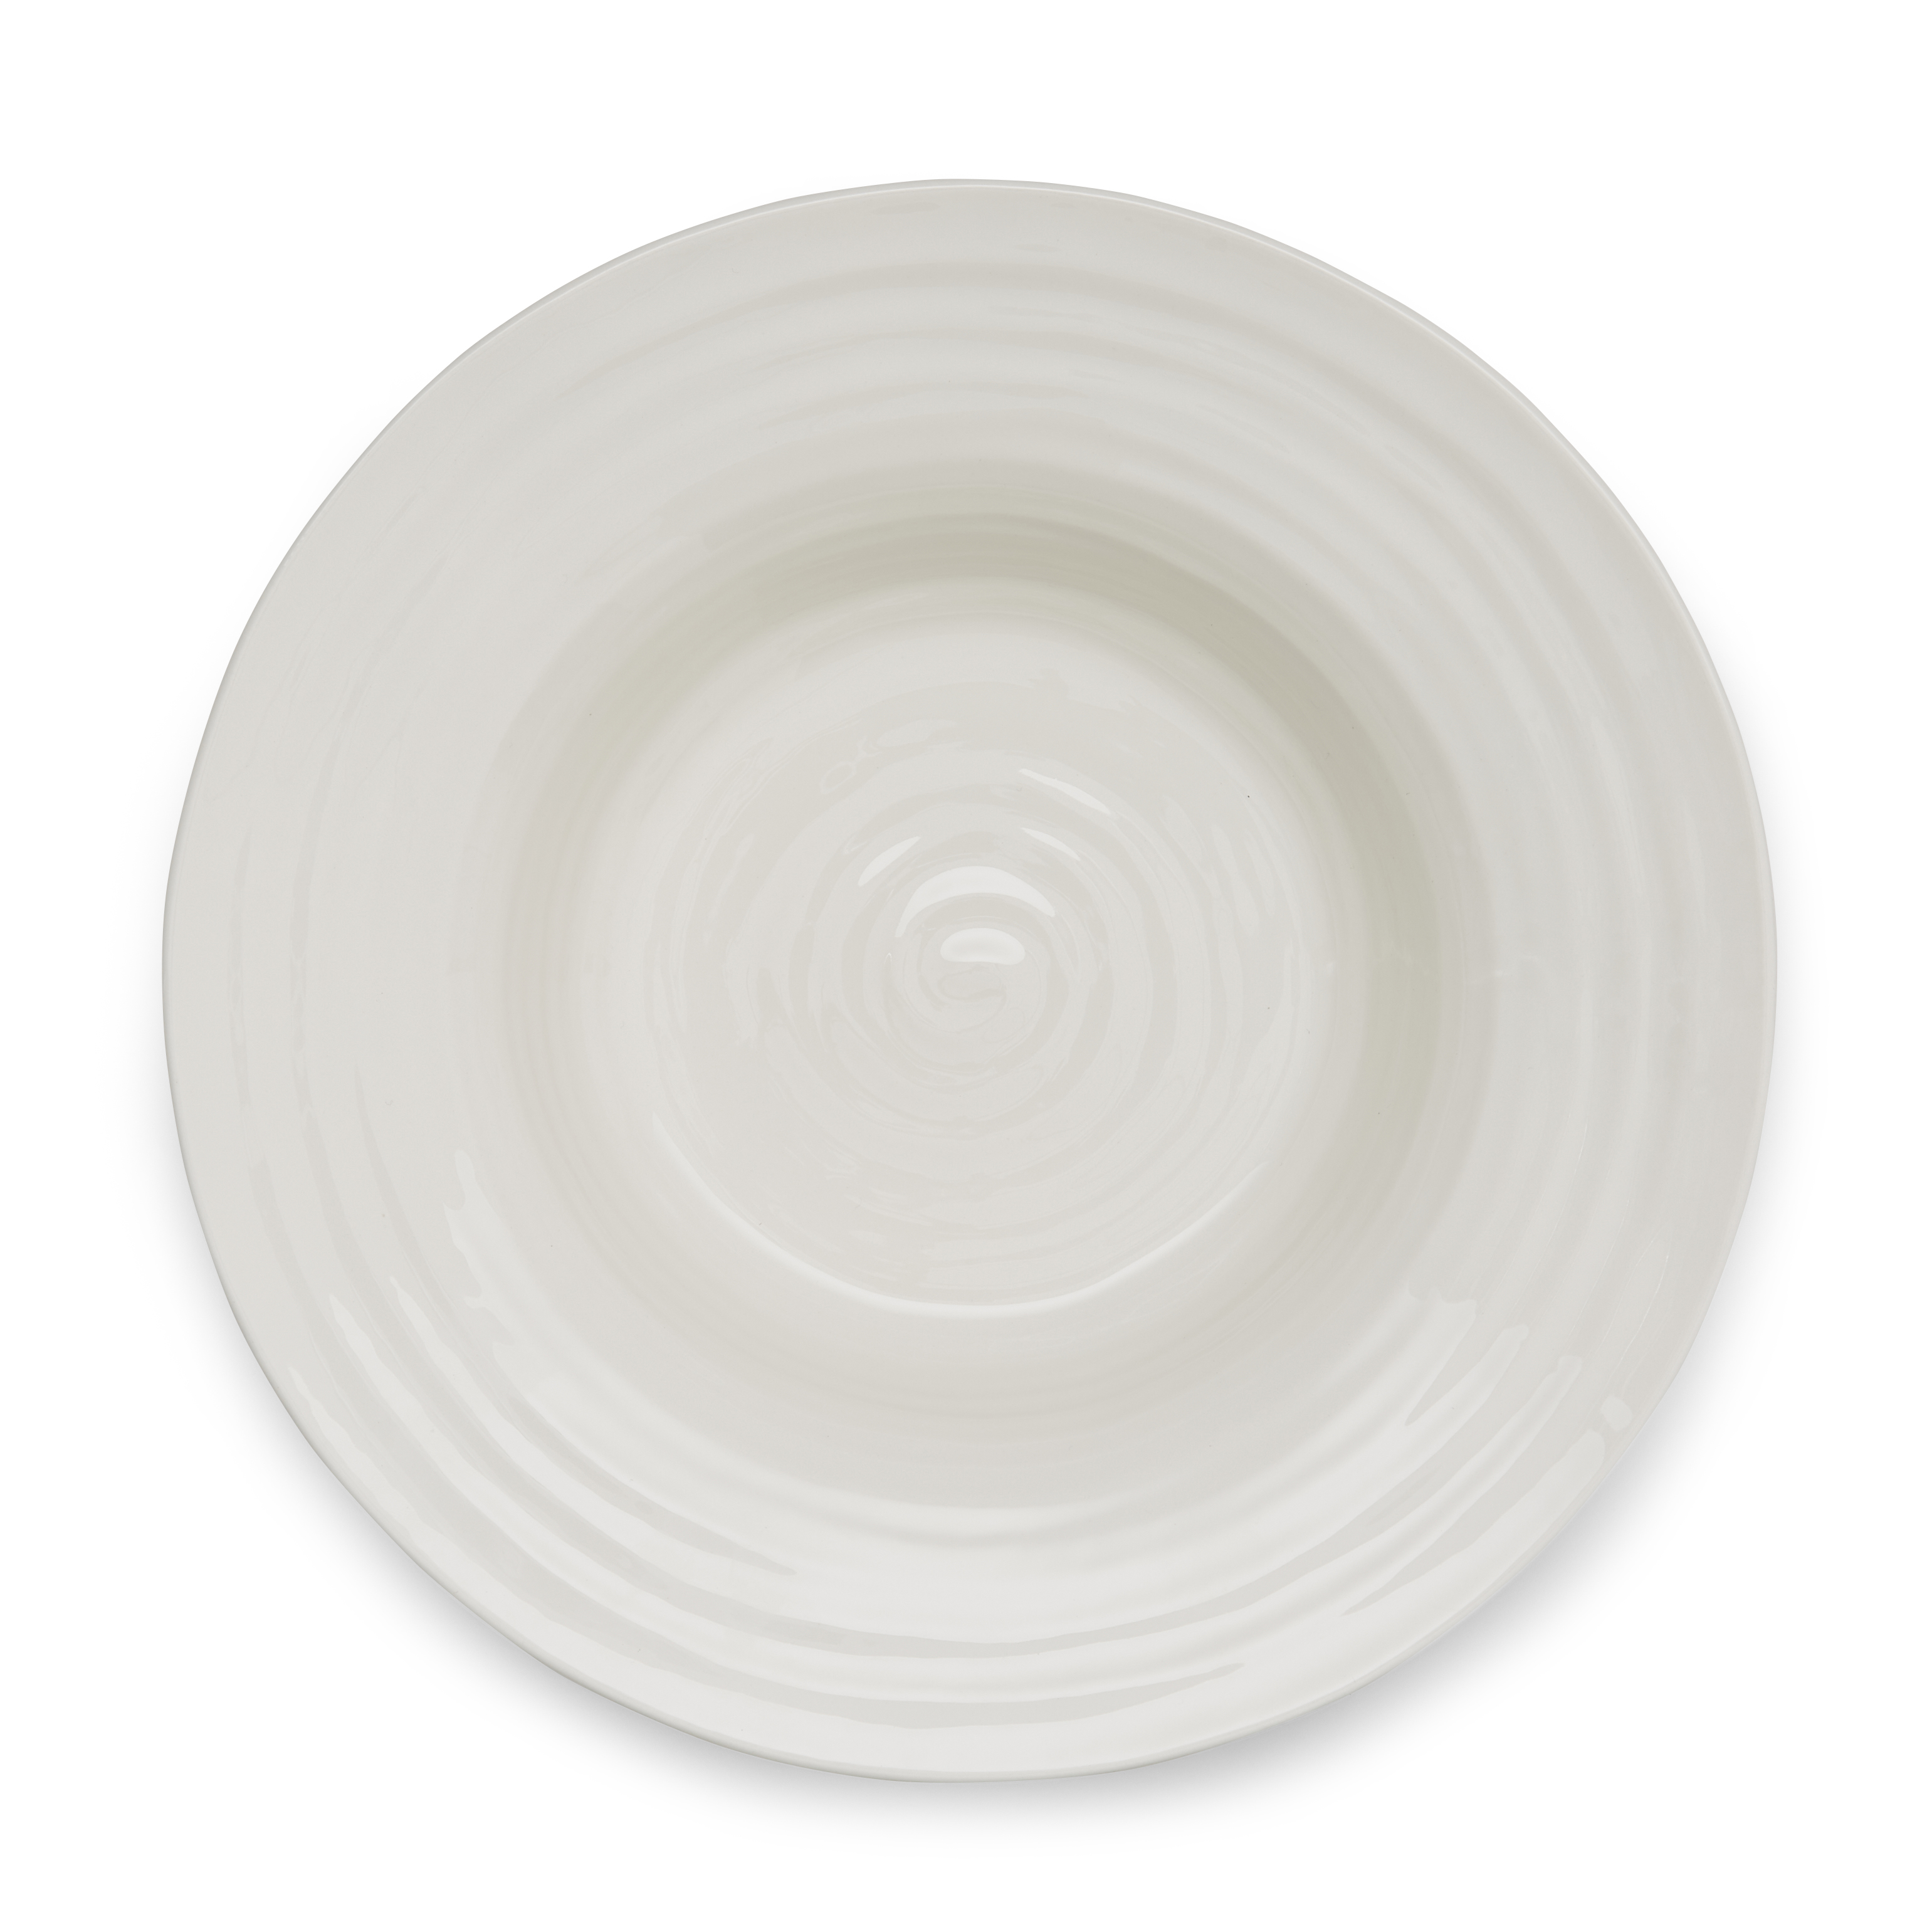 Sophie Conran Set of 2 Bistro Bowls, White image number null